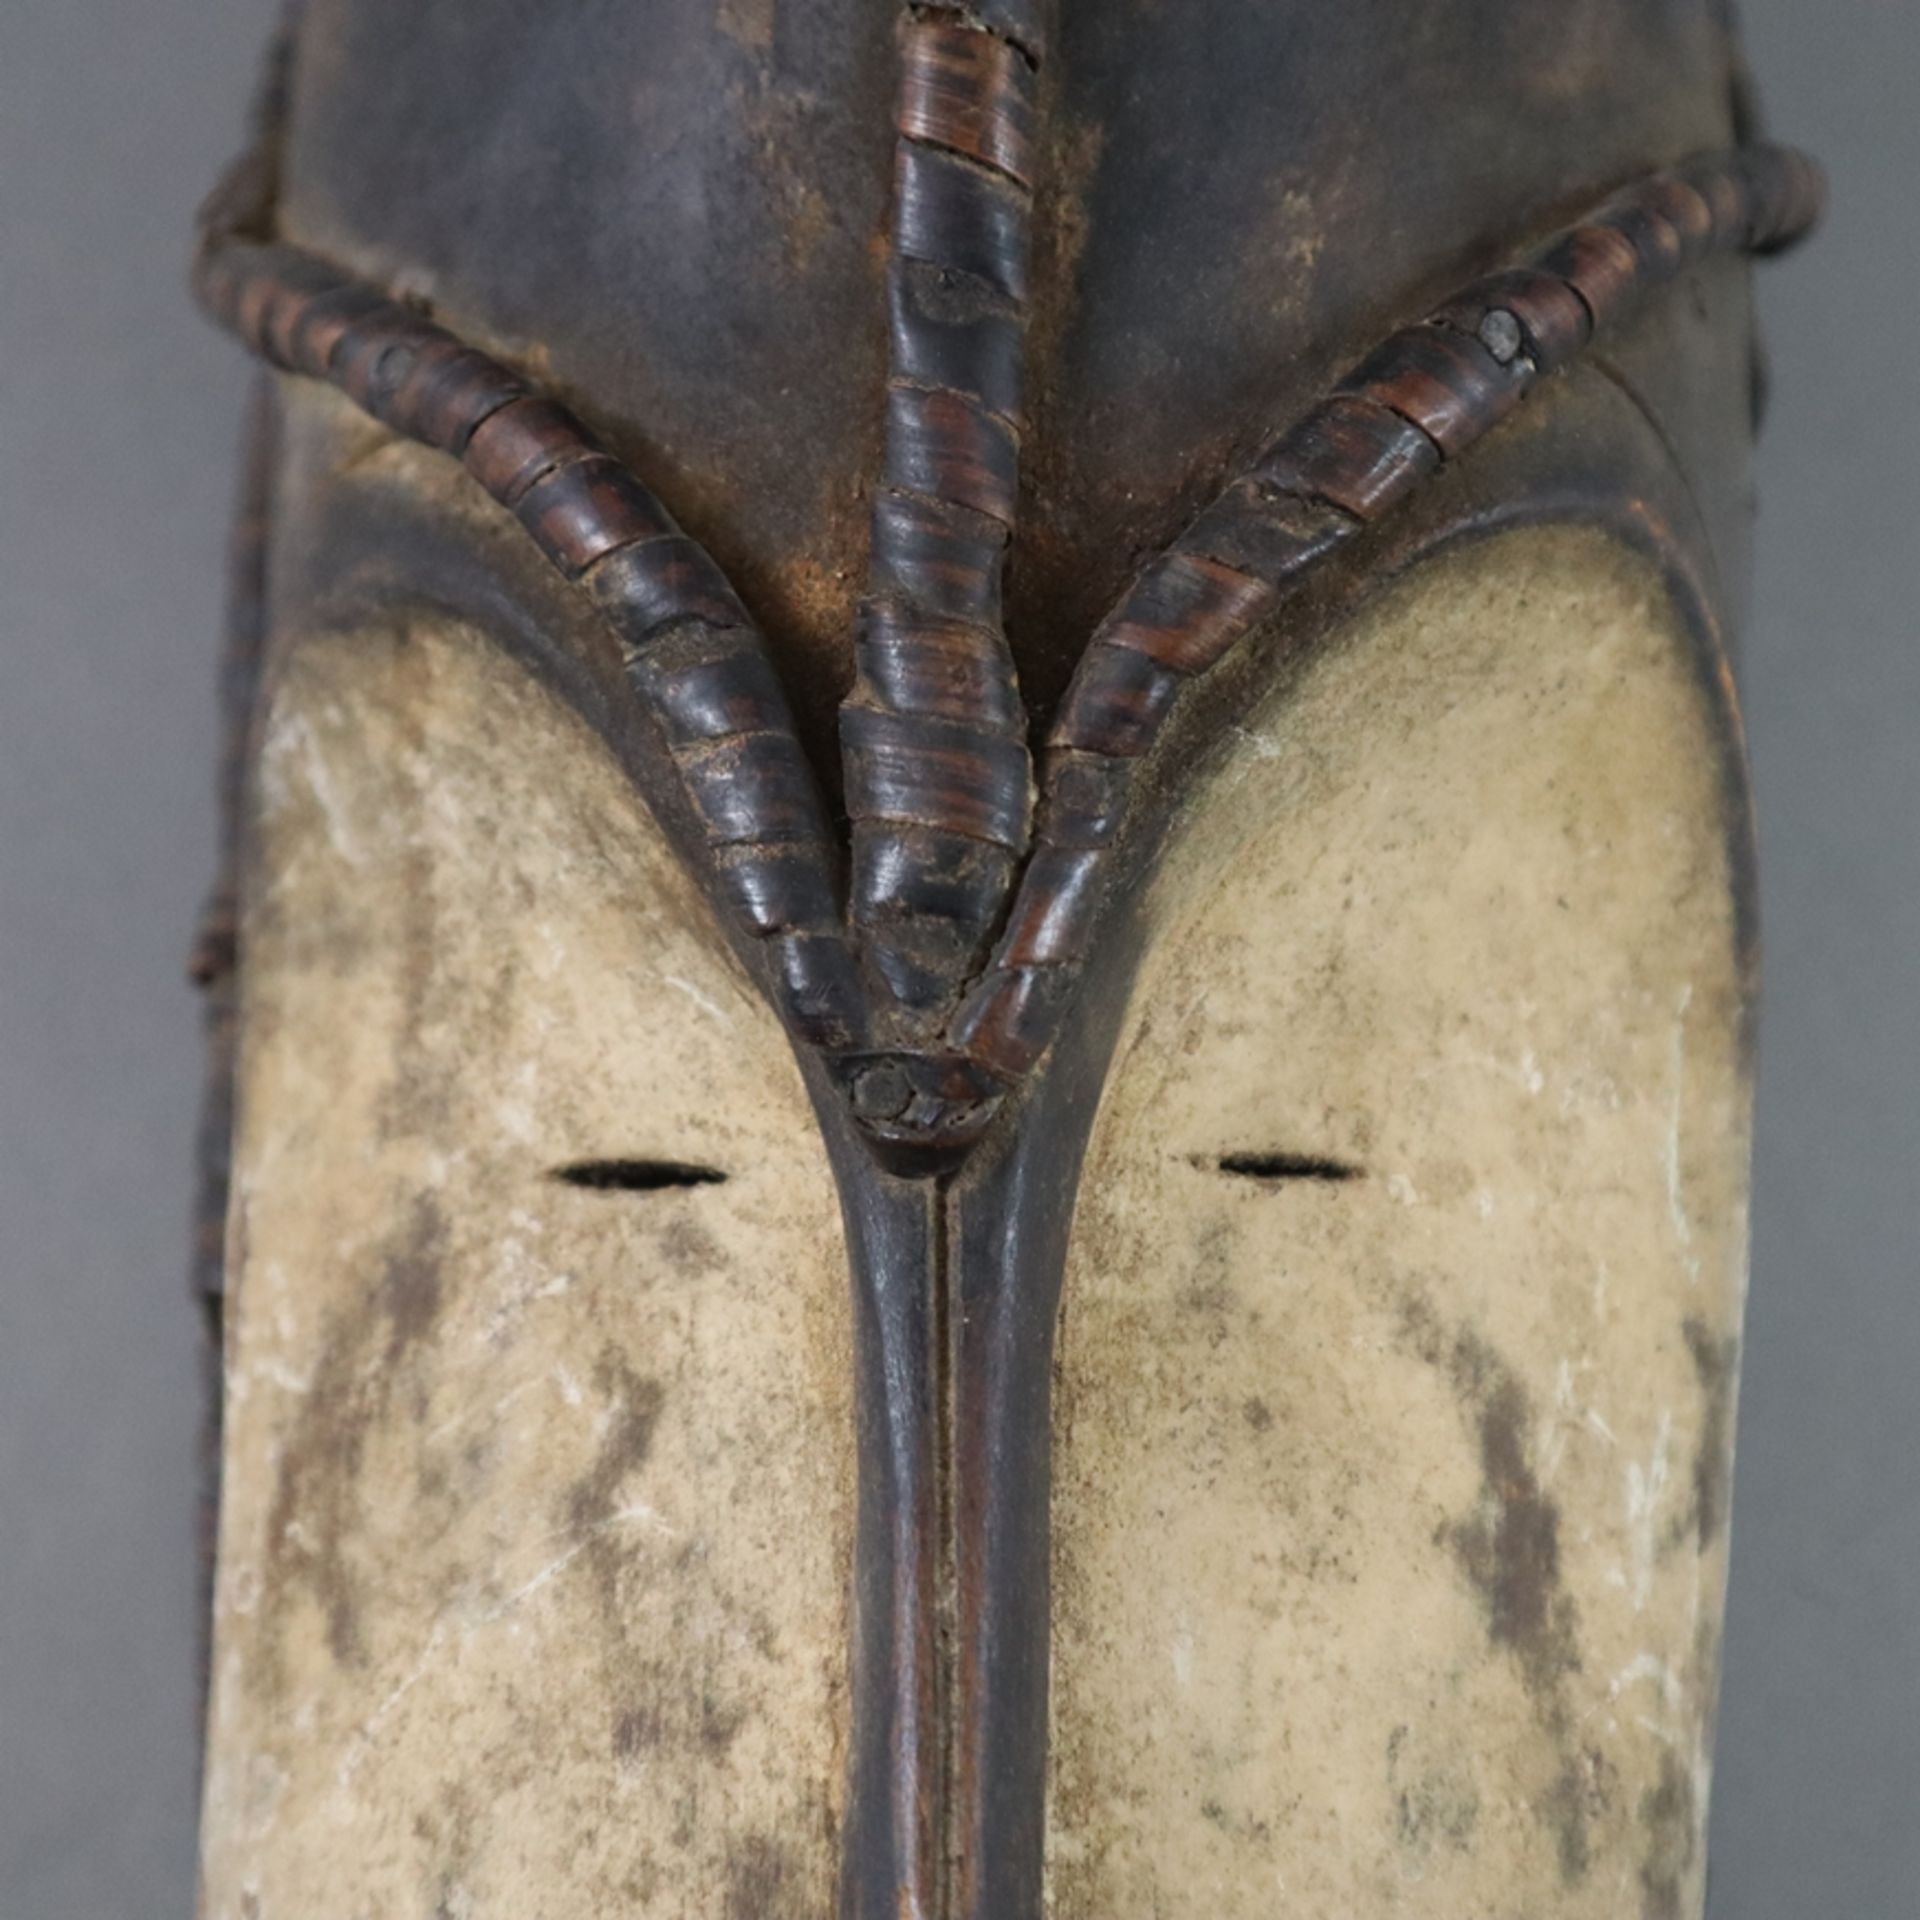 Maske der Fang - wohl Gabun, Mitte 20. Jh., Holz, geschnitzt, teils mit kalkweißer Bemalung, Flecht - Bild 3 aus 6